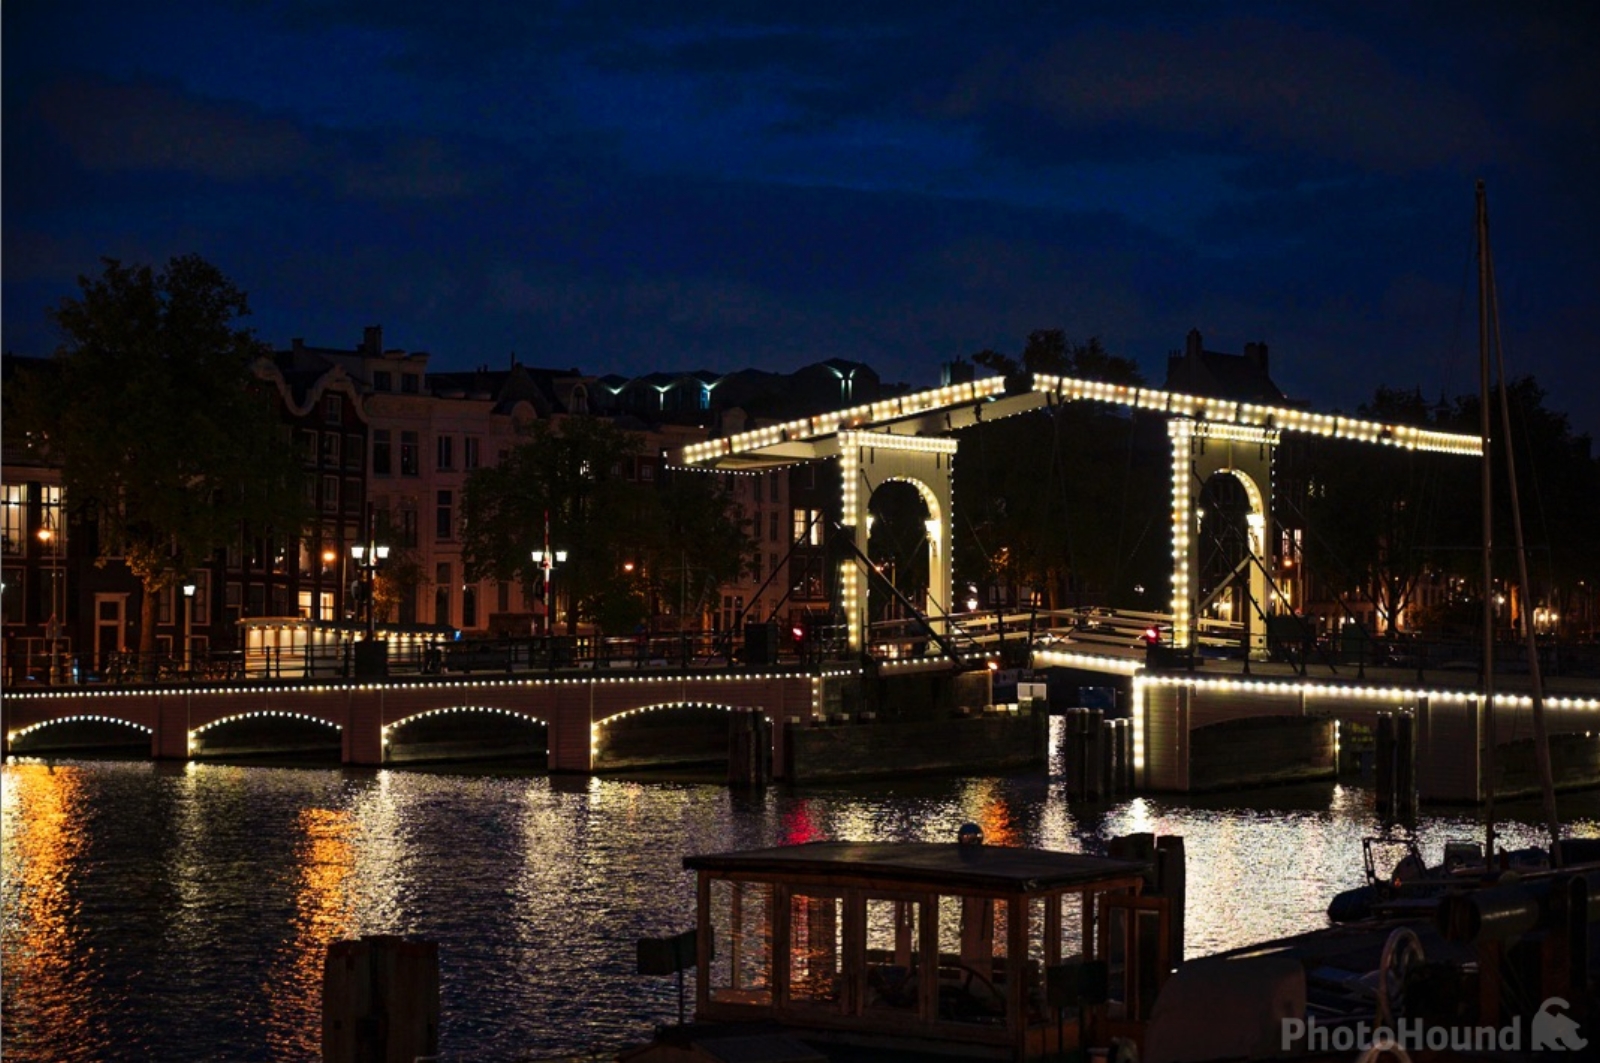 Image of Skinny Bridge of Amsterdam by Szabolcs Gulacsi